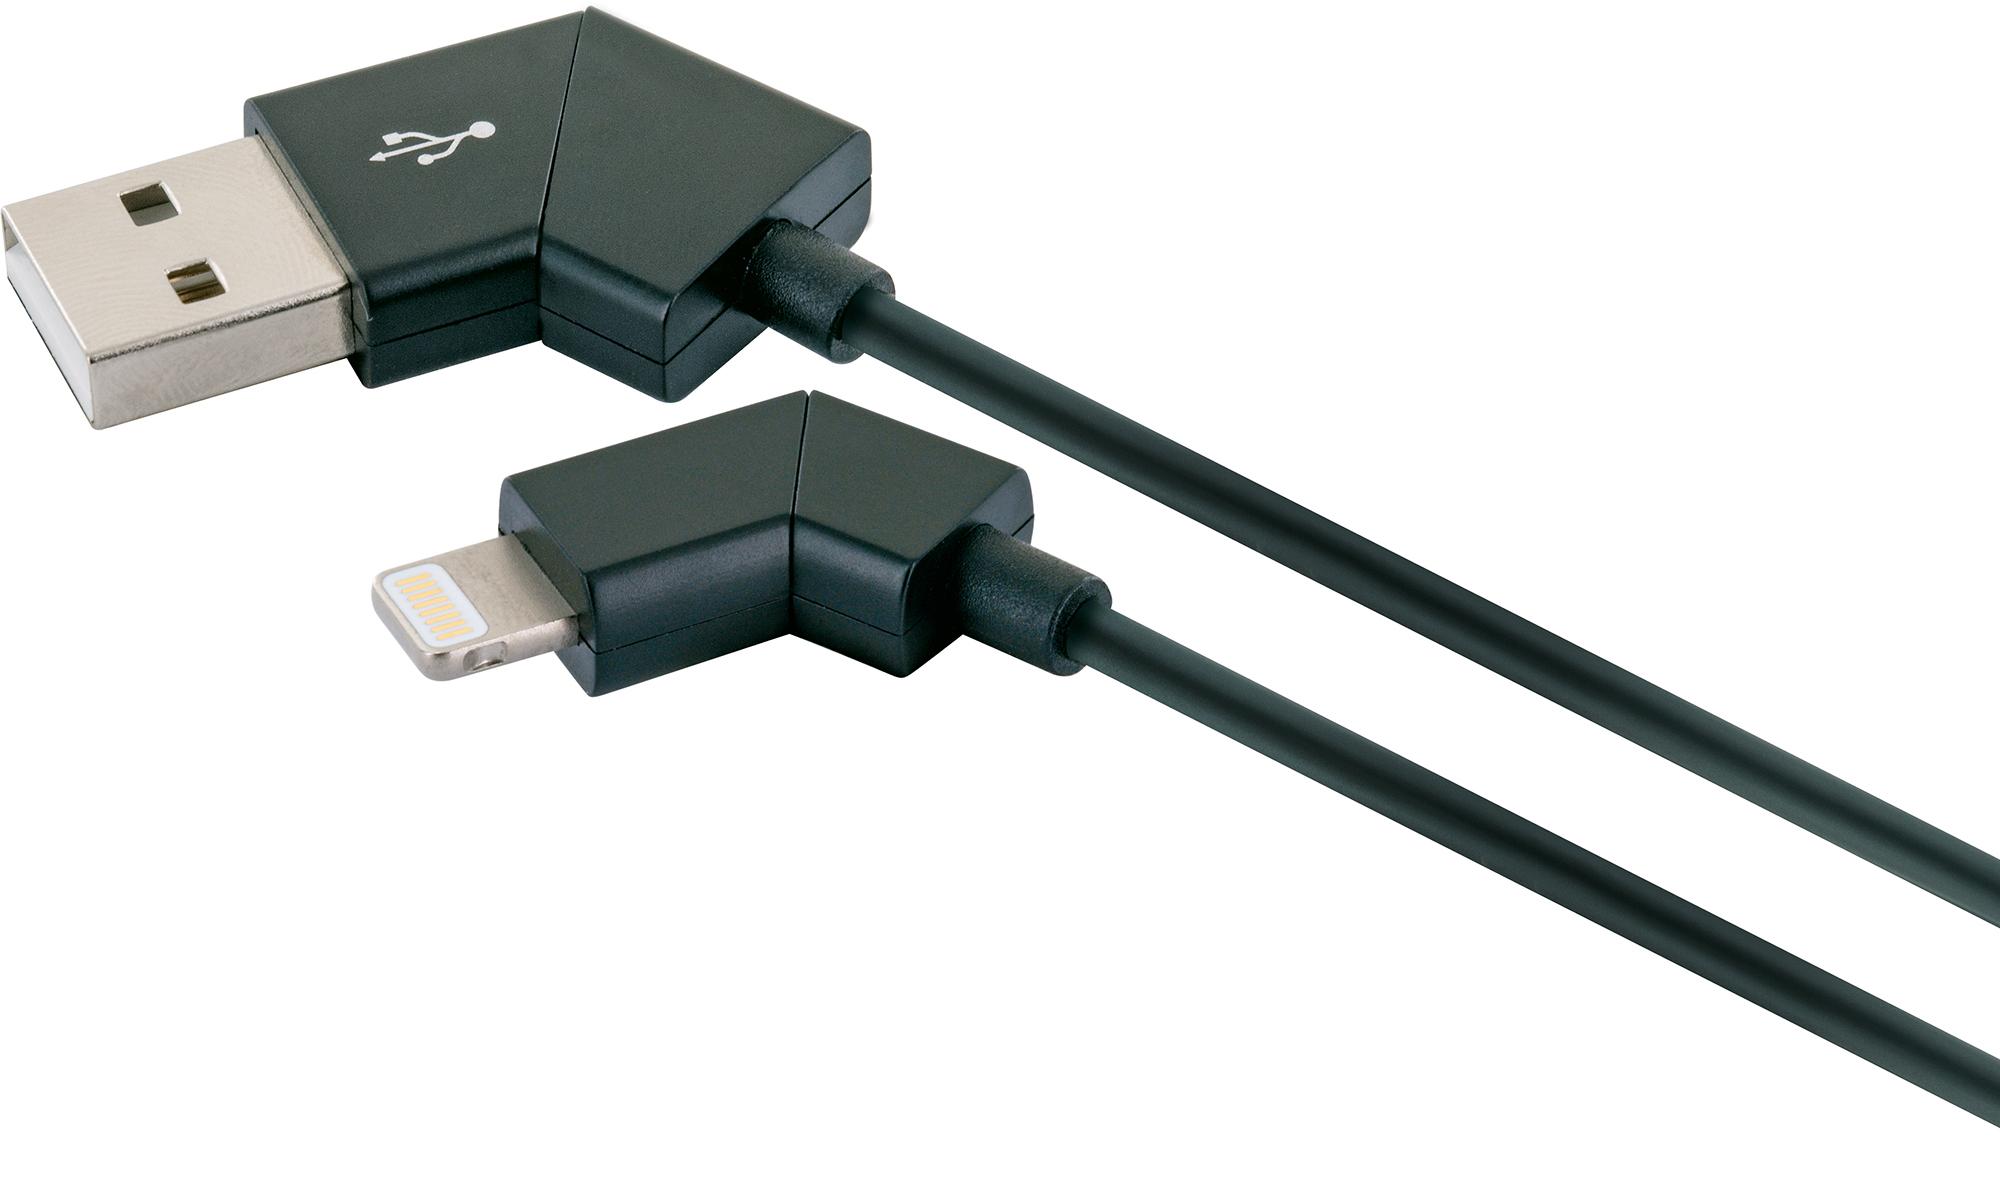 m, zu 2.0 -LKW120L Stecker, Lightning A 533-, Sync SCHWAIGER 1,2 Apple Lightning Stecker Schwarz & drehbar Apple Ladekabel USB